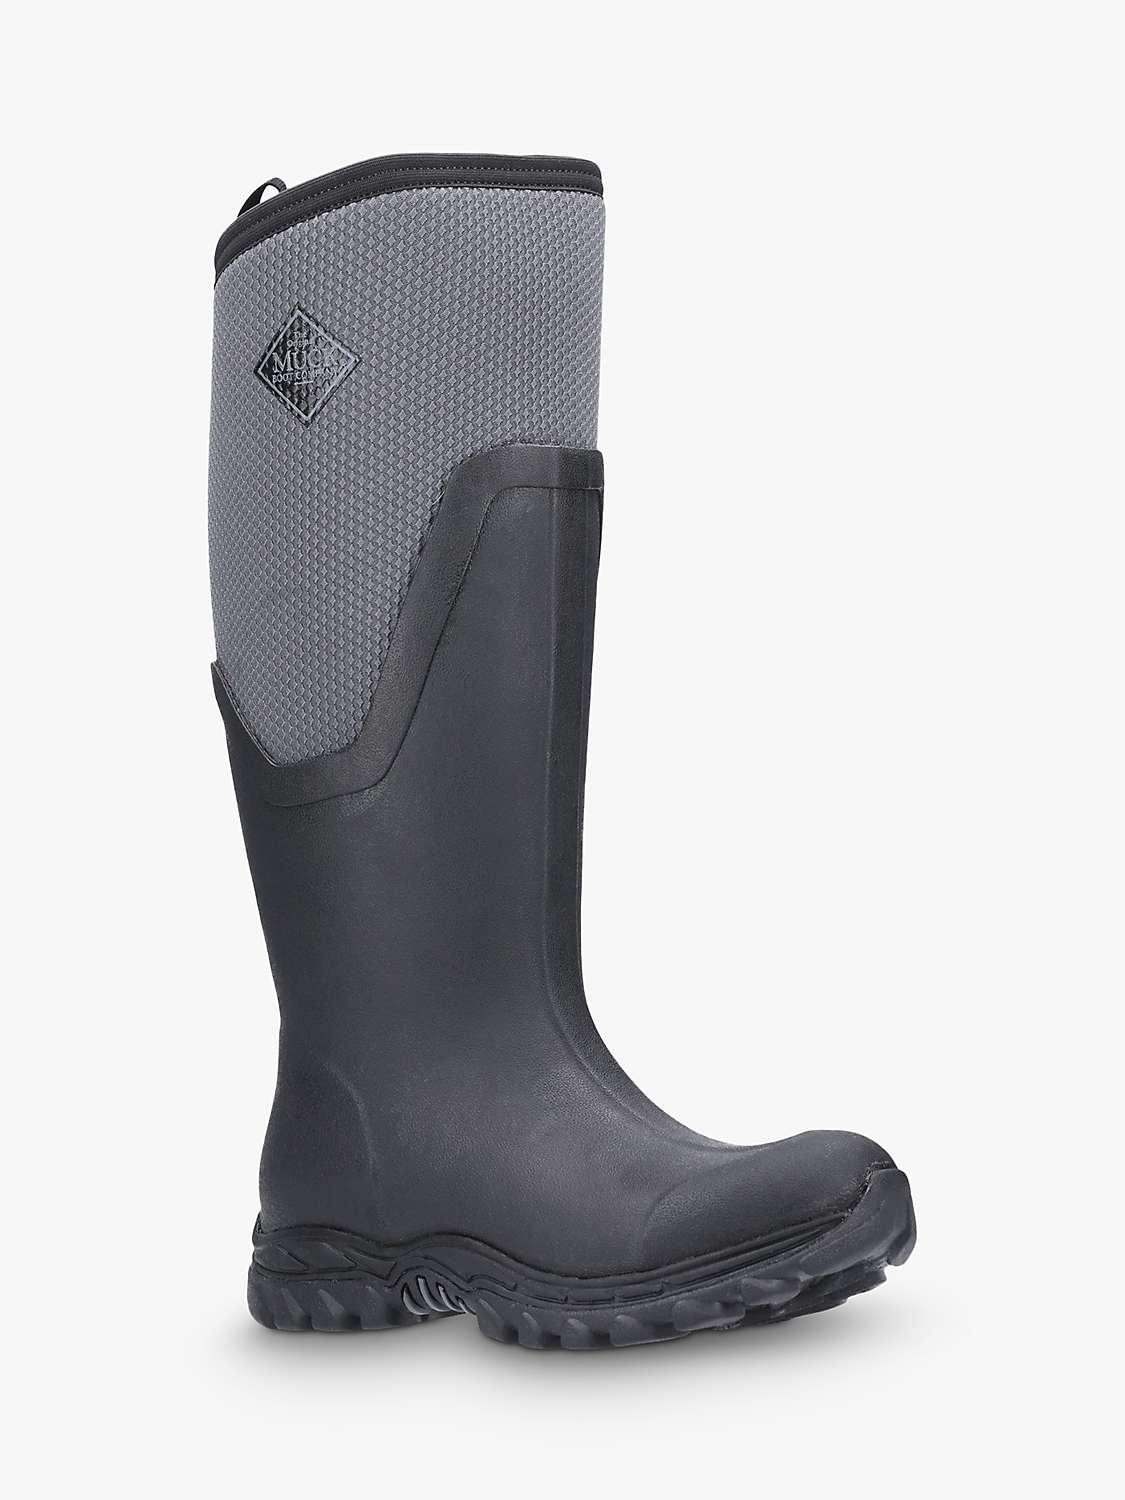 Buy Muck Arctic Sport II Tall Wellington Boots Online at johnlewis.com